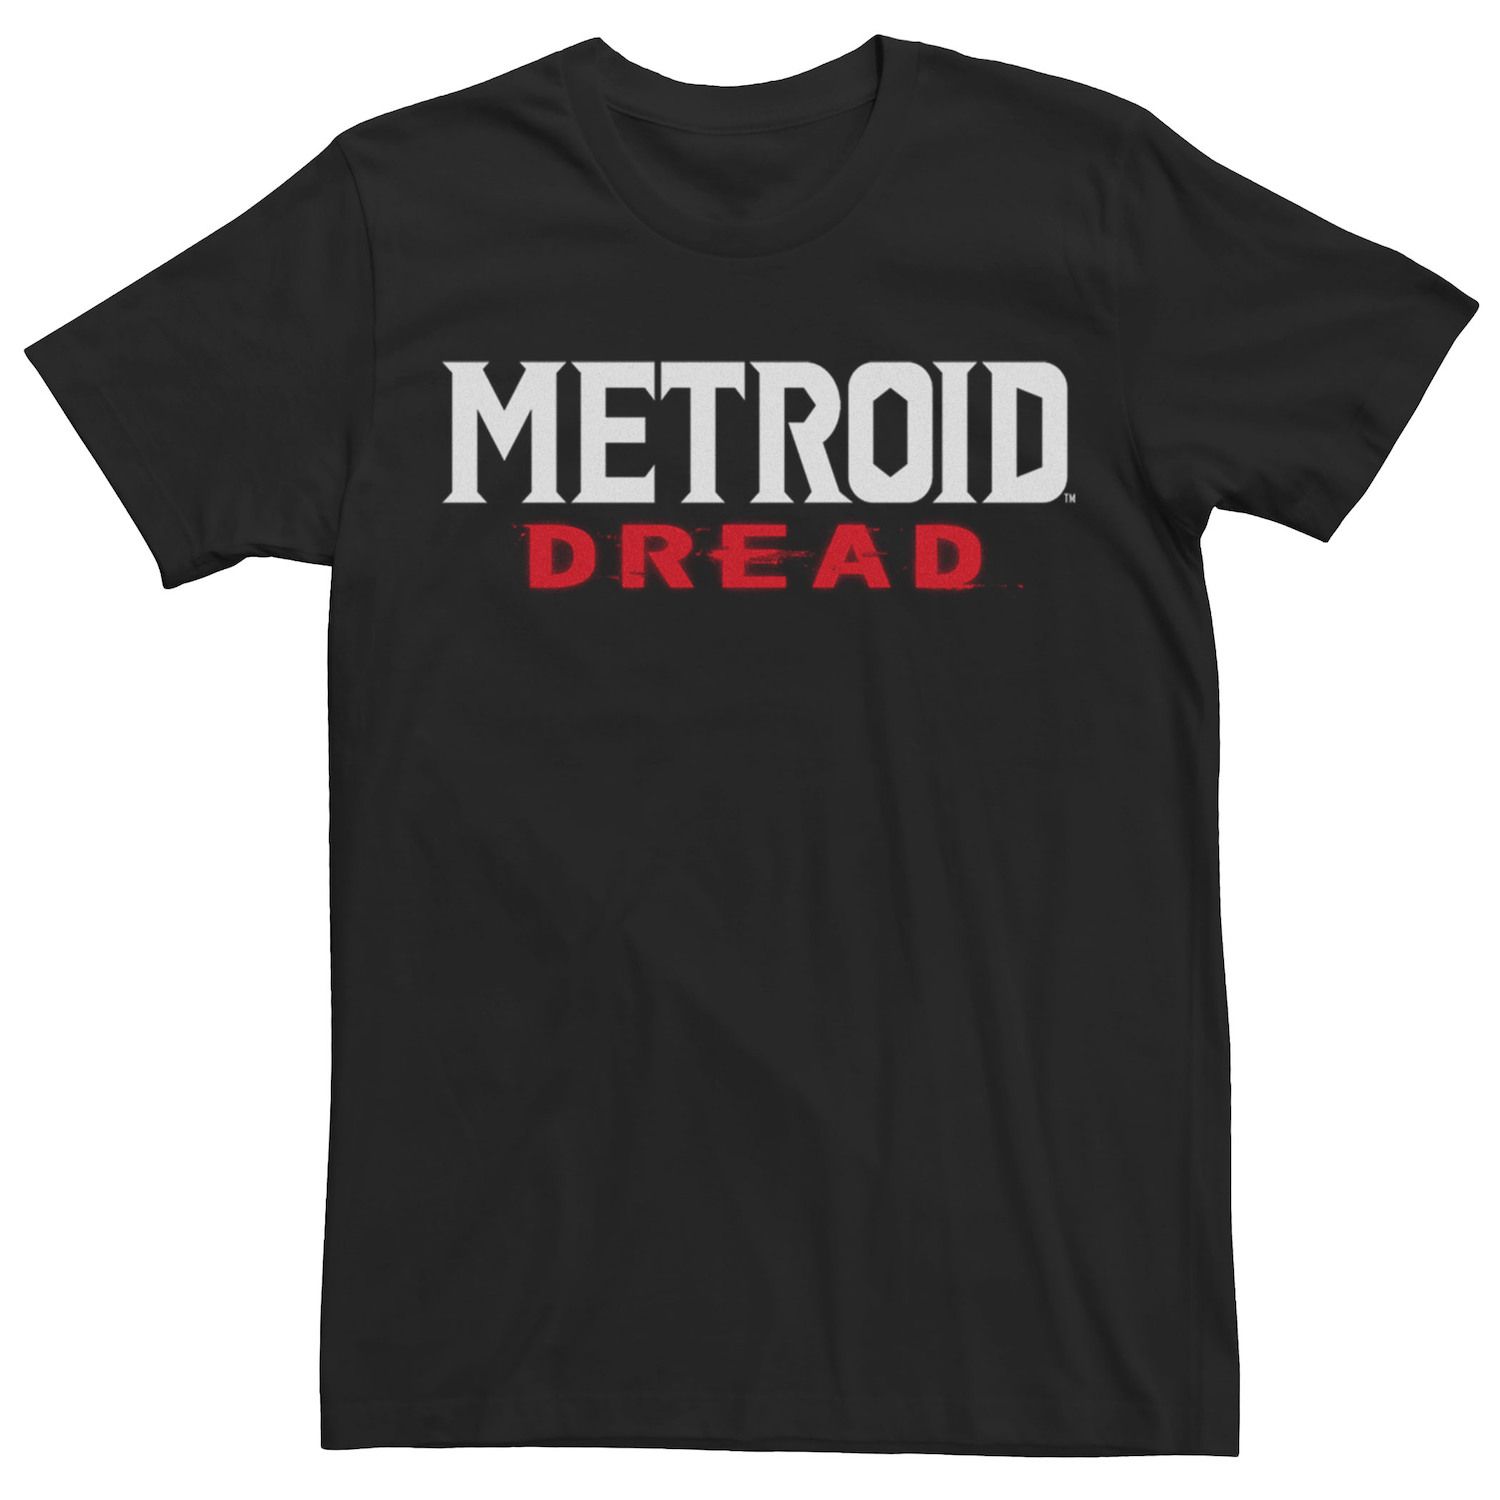 Мужская футболка с логотипом Metroid Prime Dread Licensed Character swtich amiibo карта galaxy warrior связь sahms emmi metroid dread